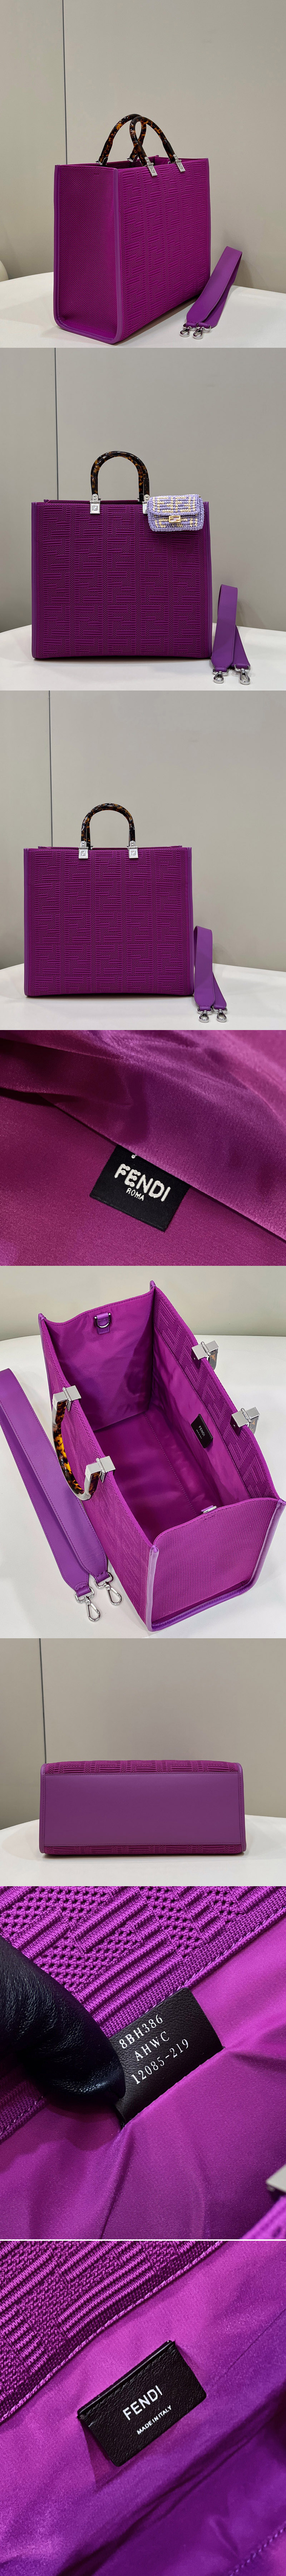 Replica Fendi Bags